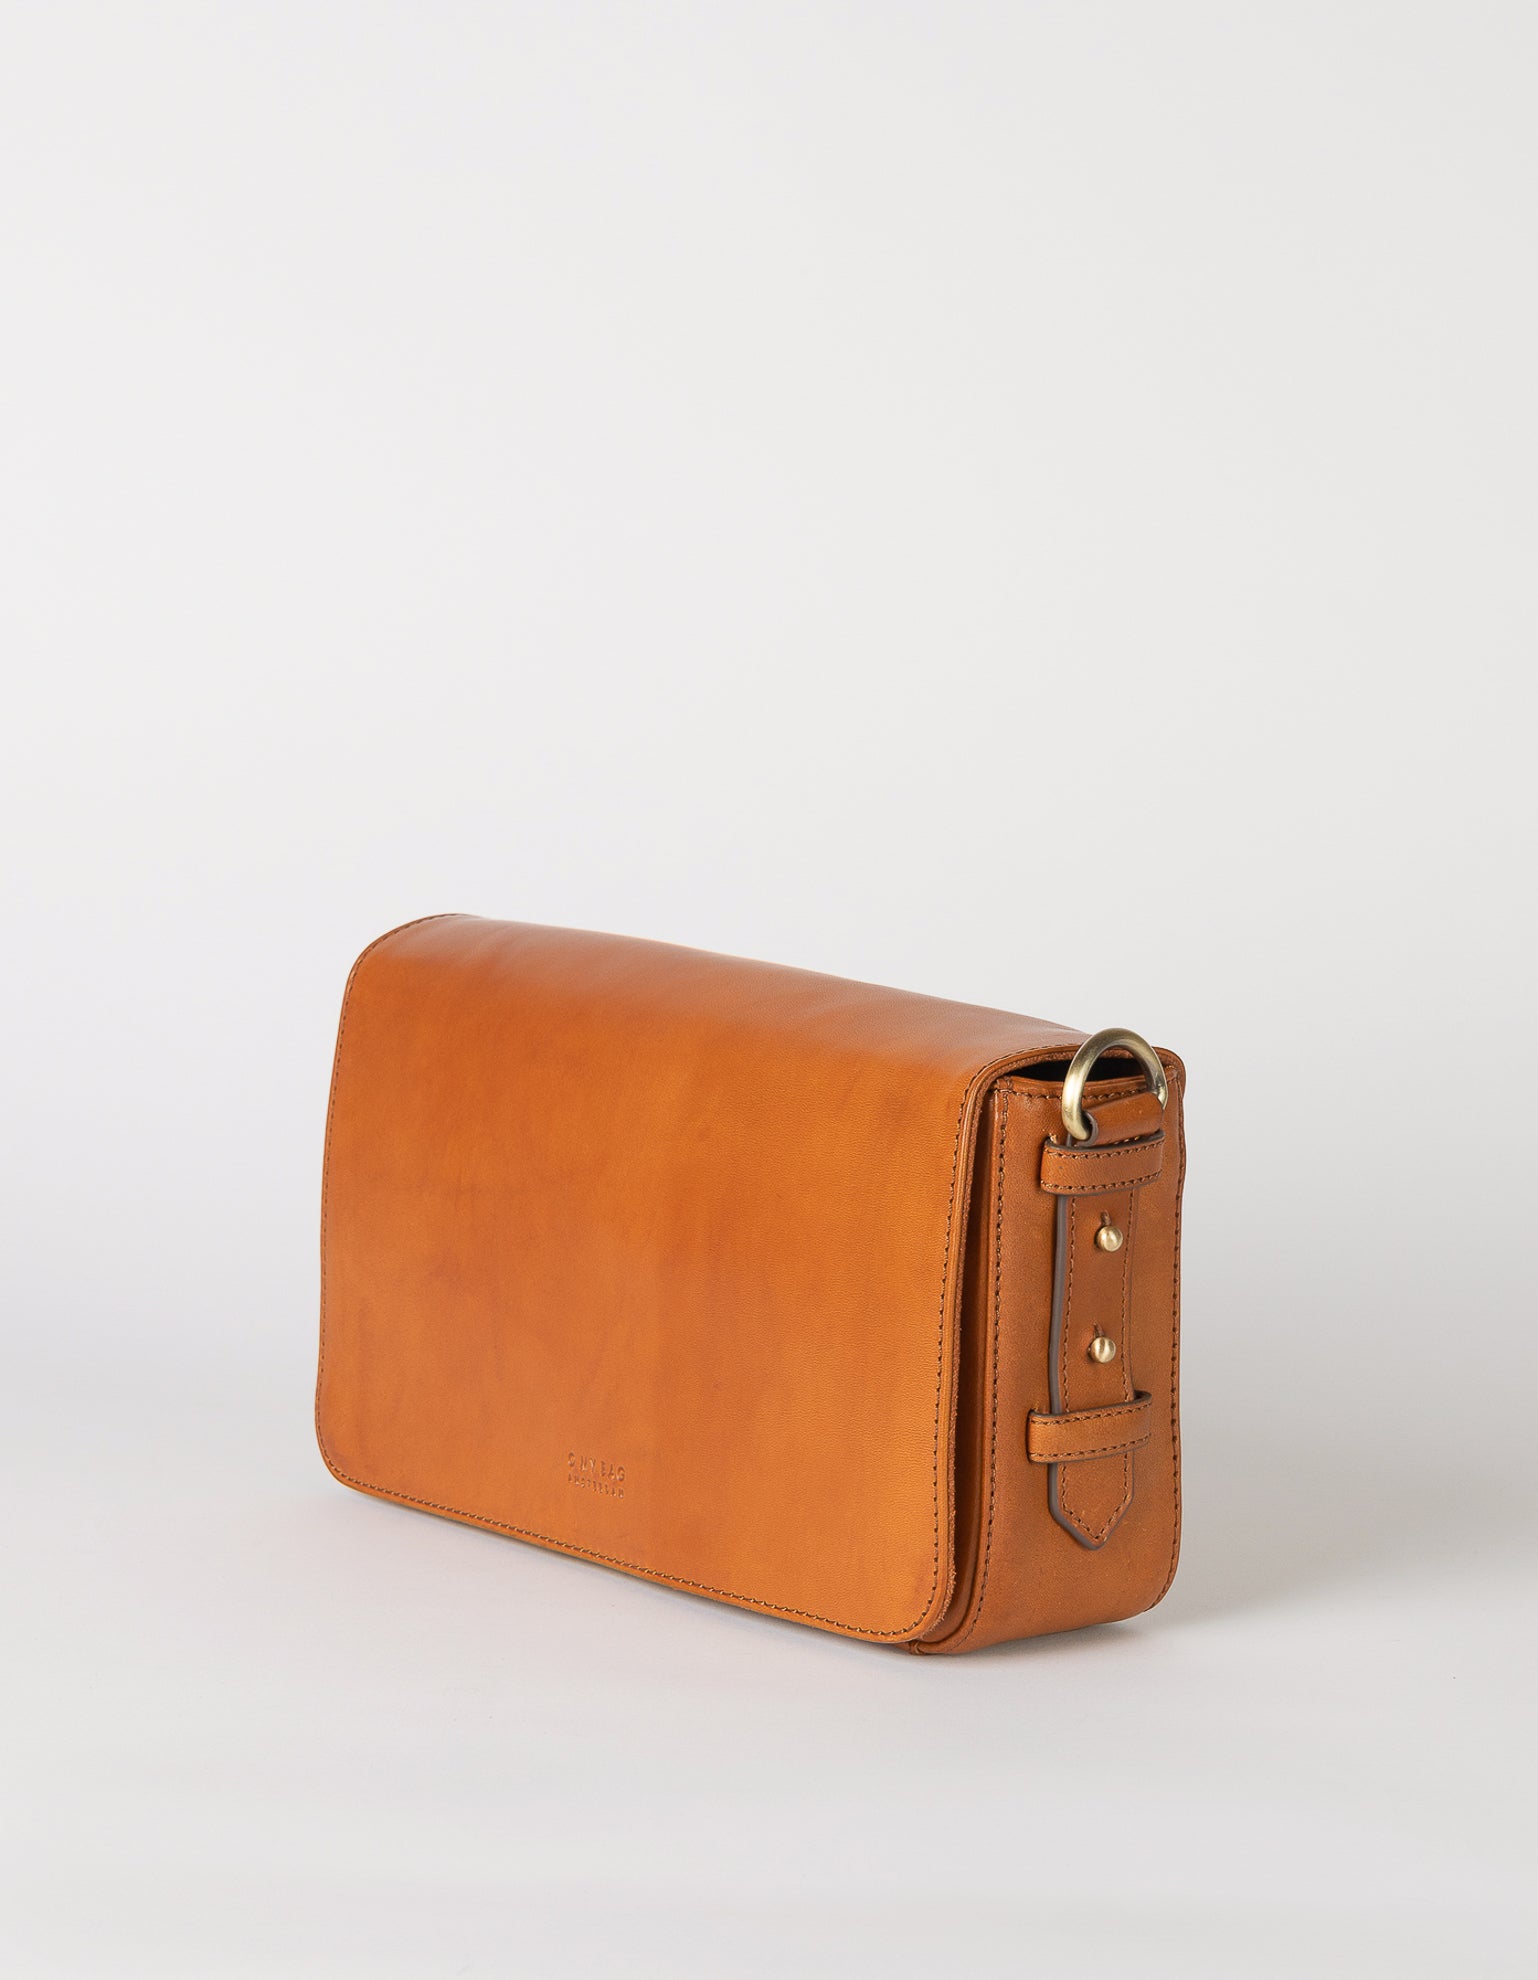 Cognac Longuette Leather womens handbag. D ring side product image.